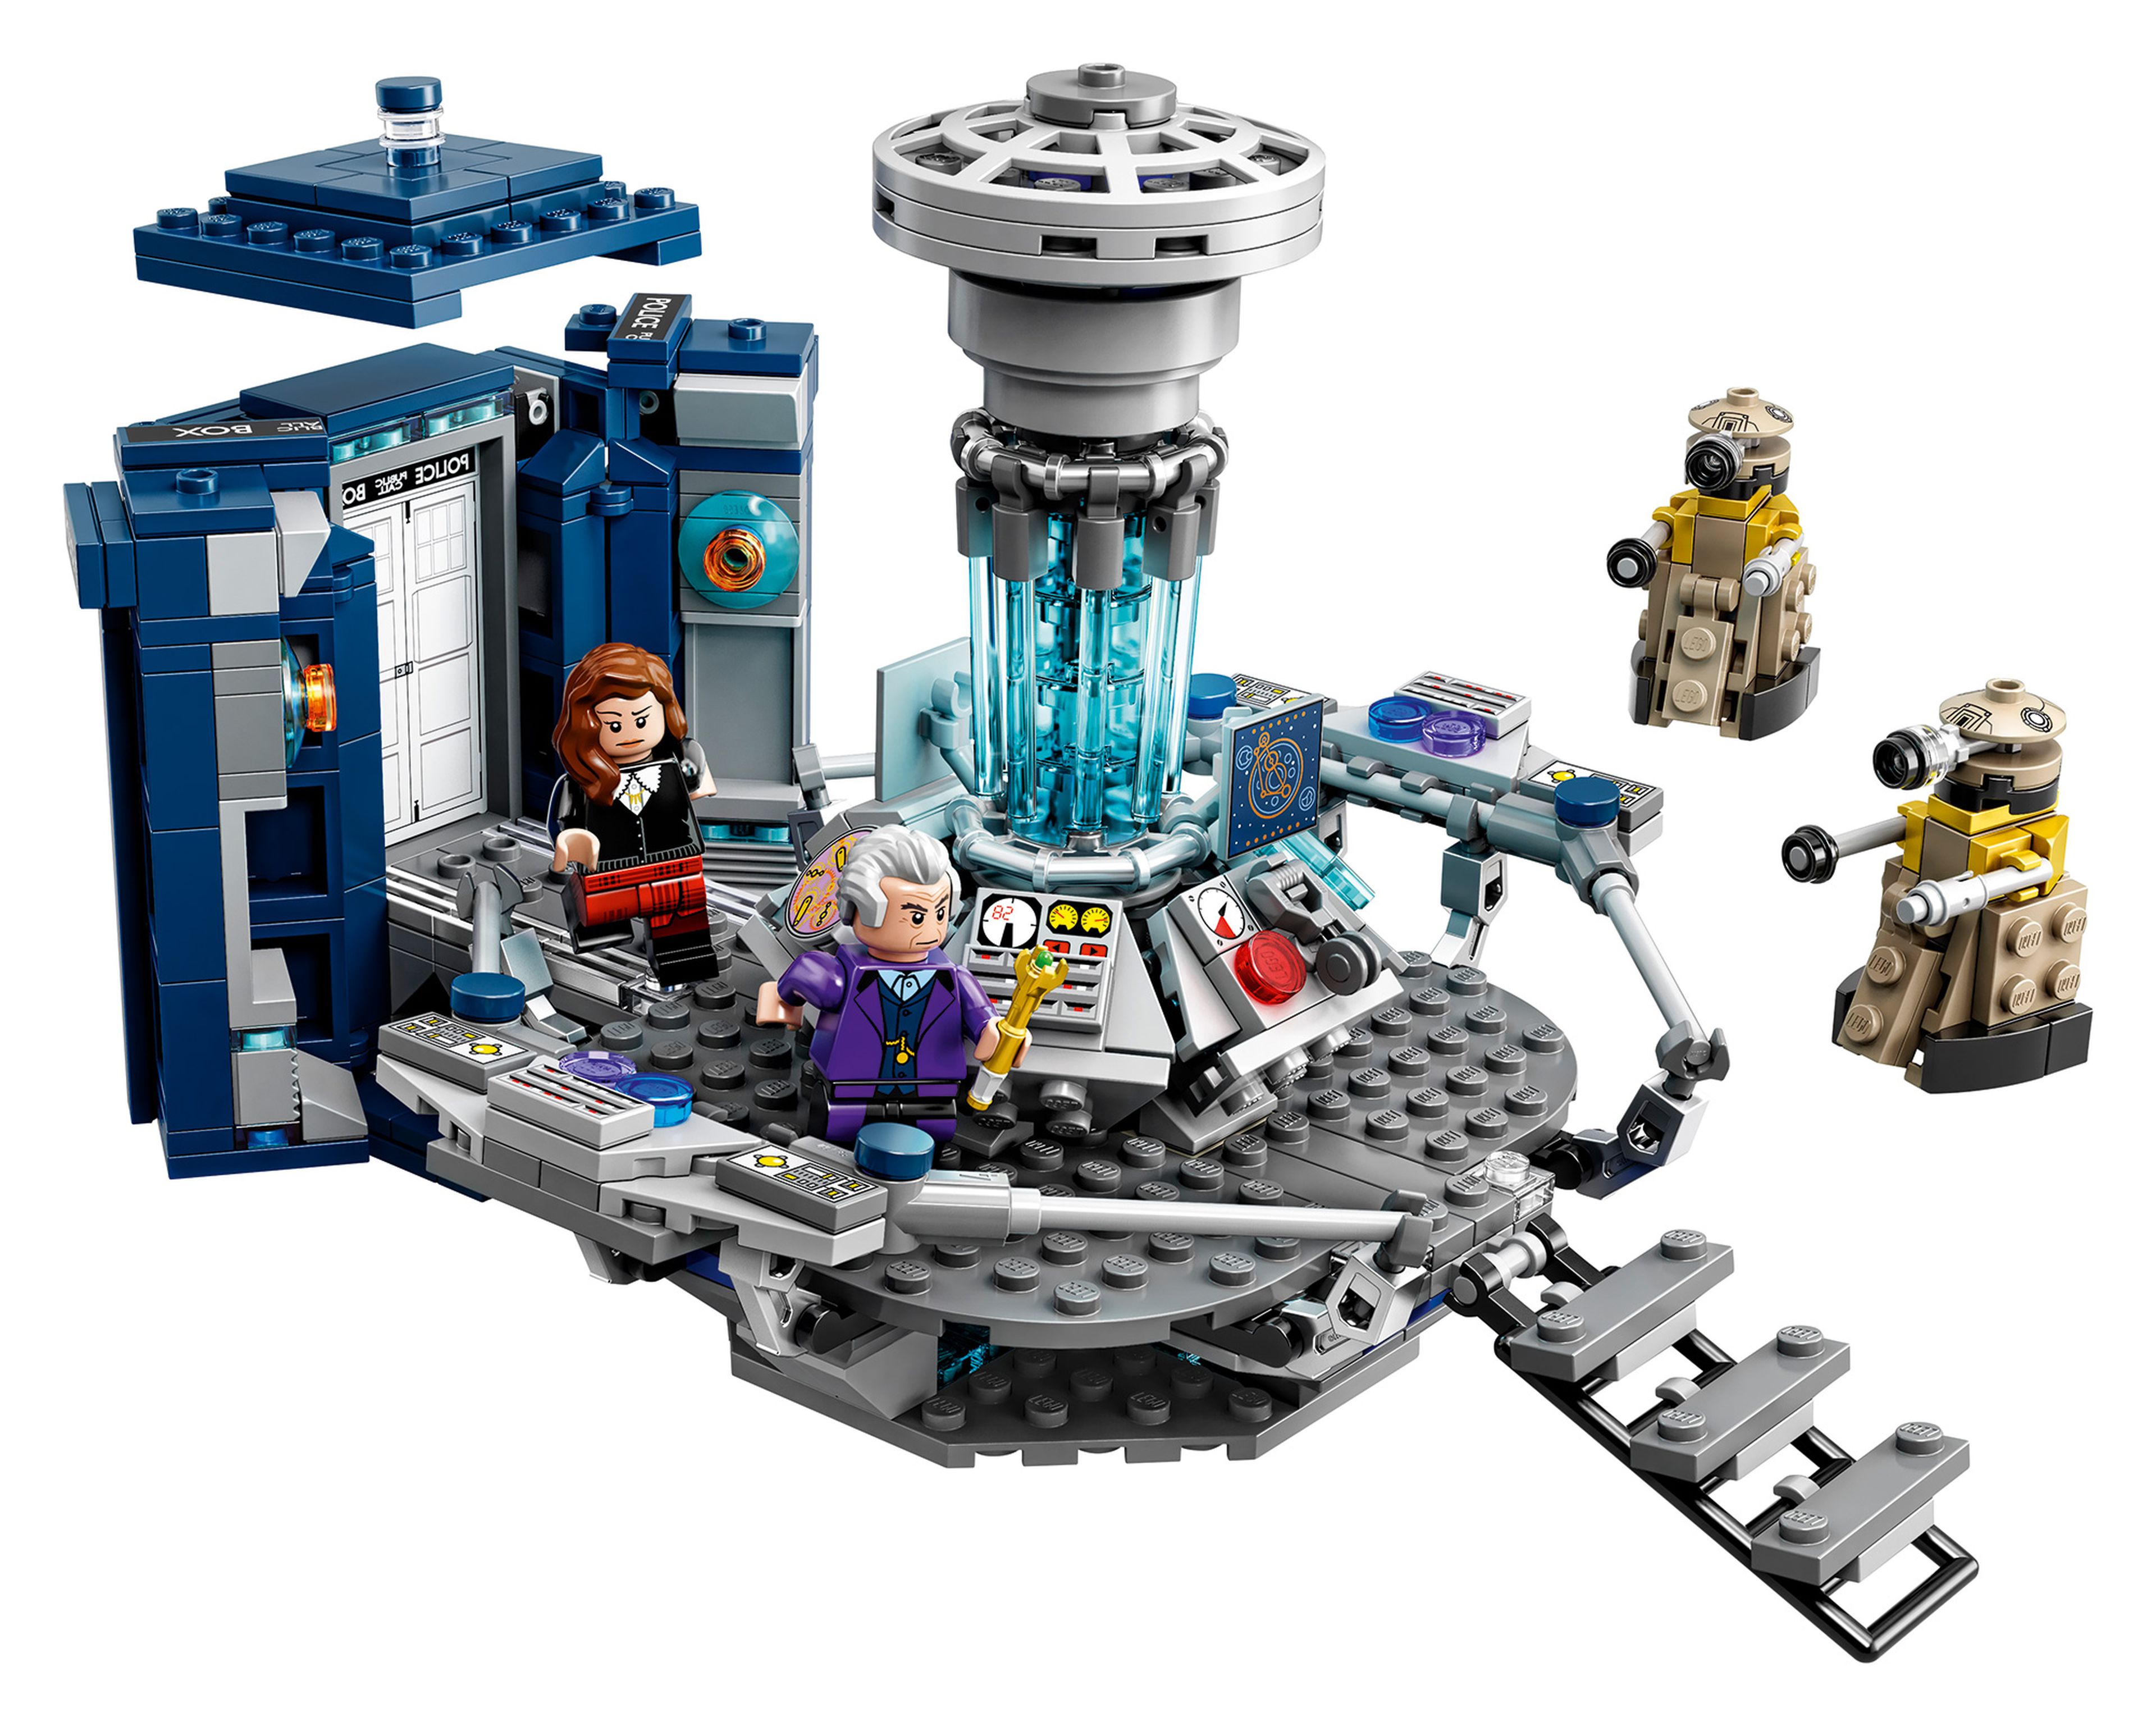 Doctor Who: LEGO revela su nuevo set